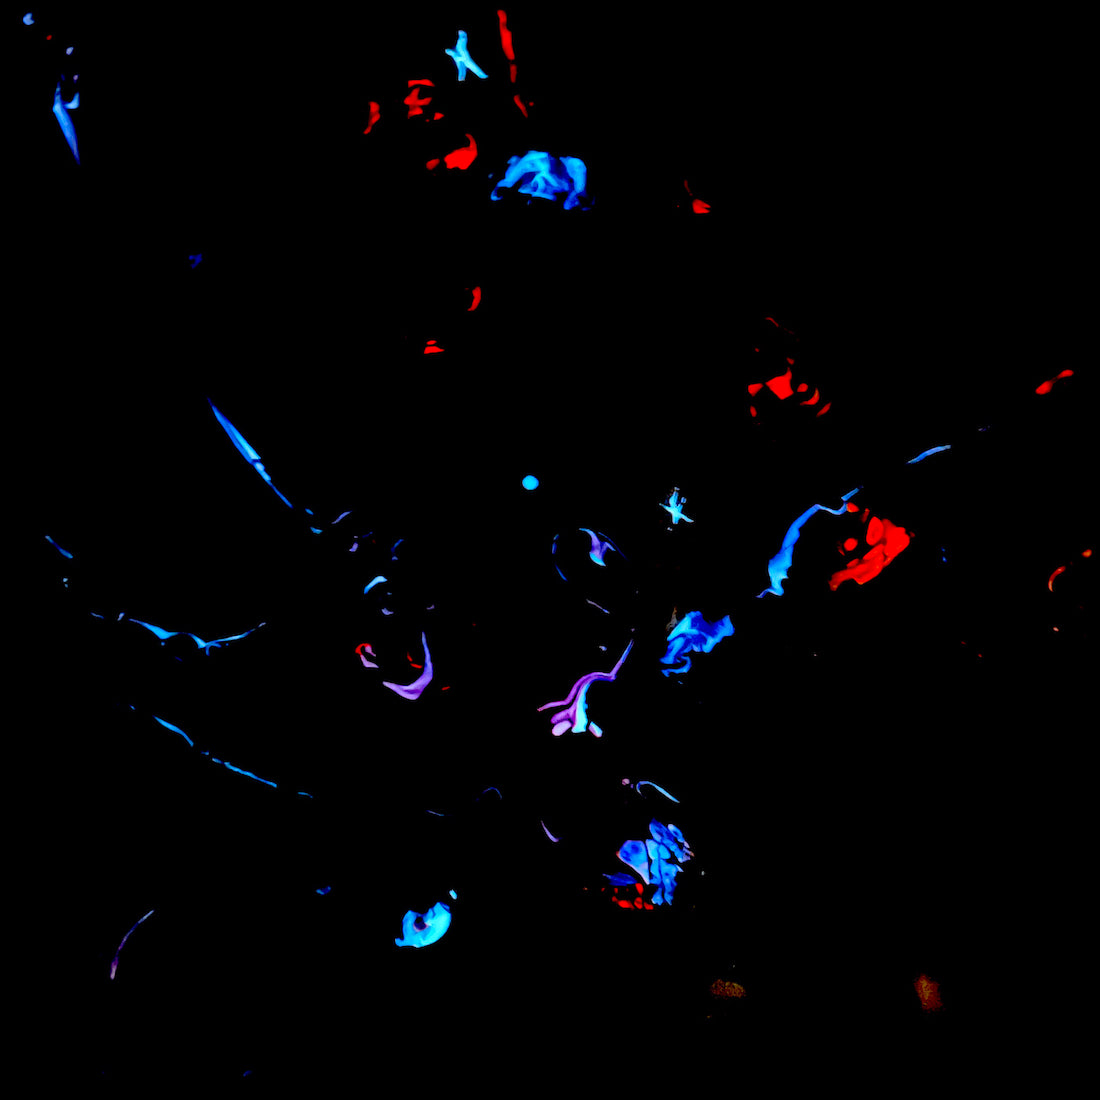 glow in the dark art simulating brain activity after Michael Carini's violent car crash